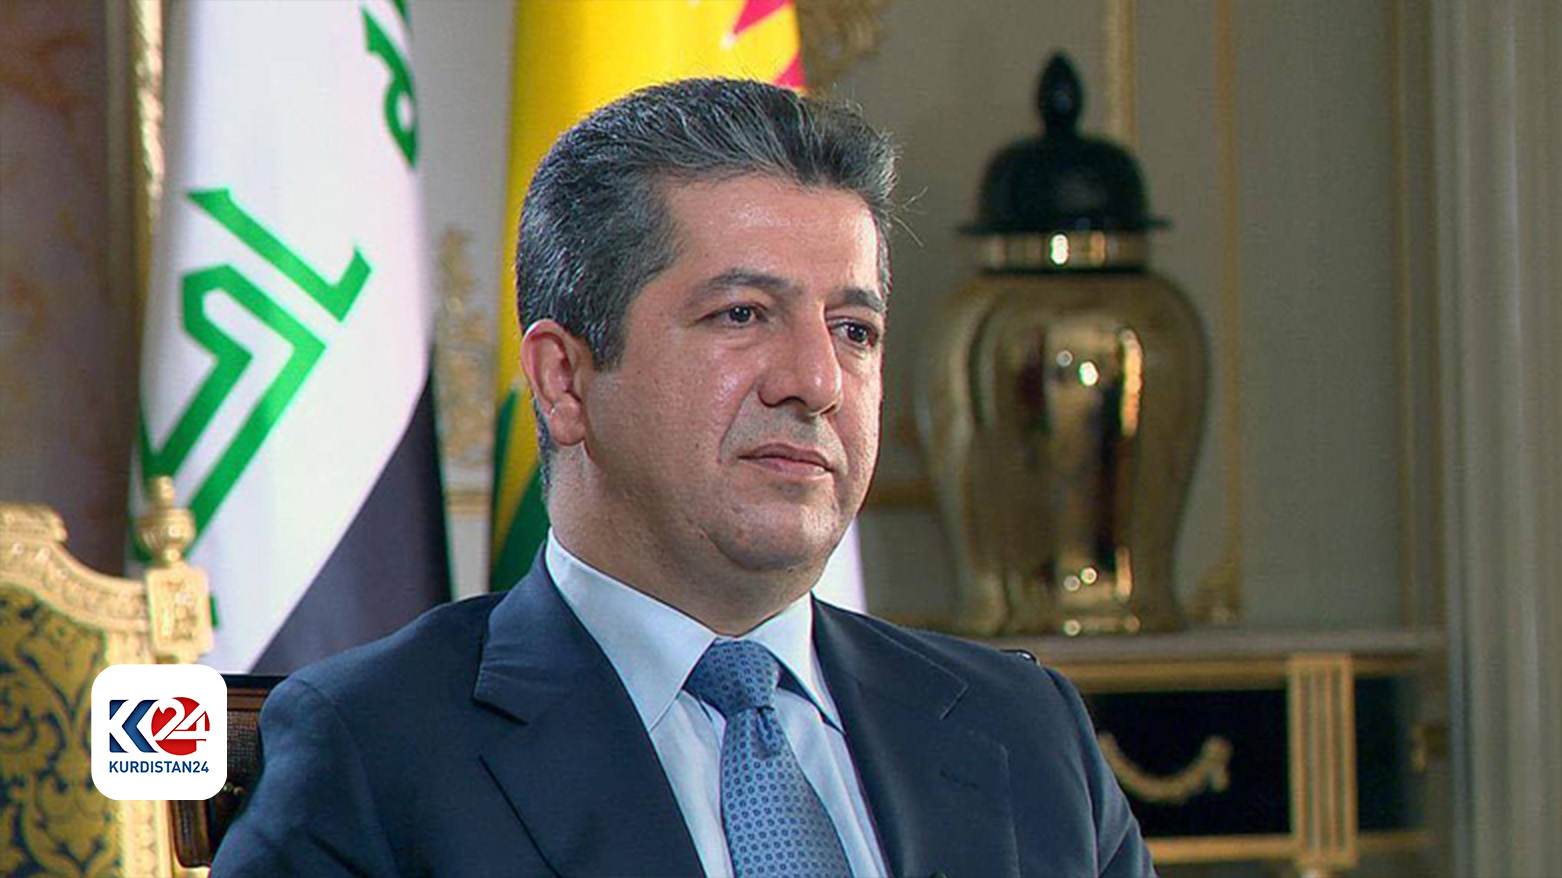 Iraqs Federal Court Legal expert questions legitimacy and political bias